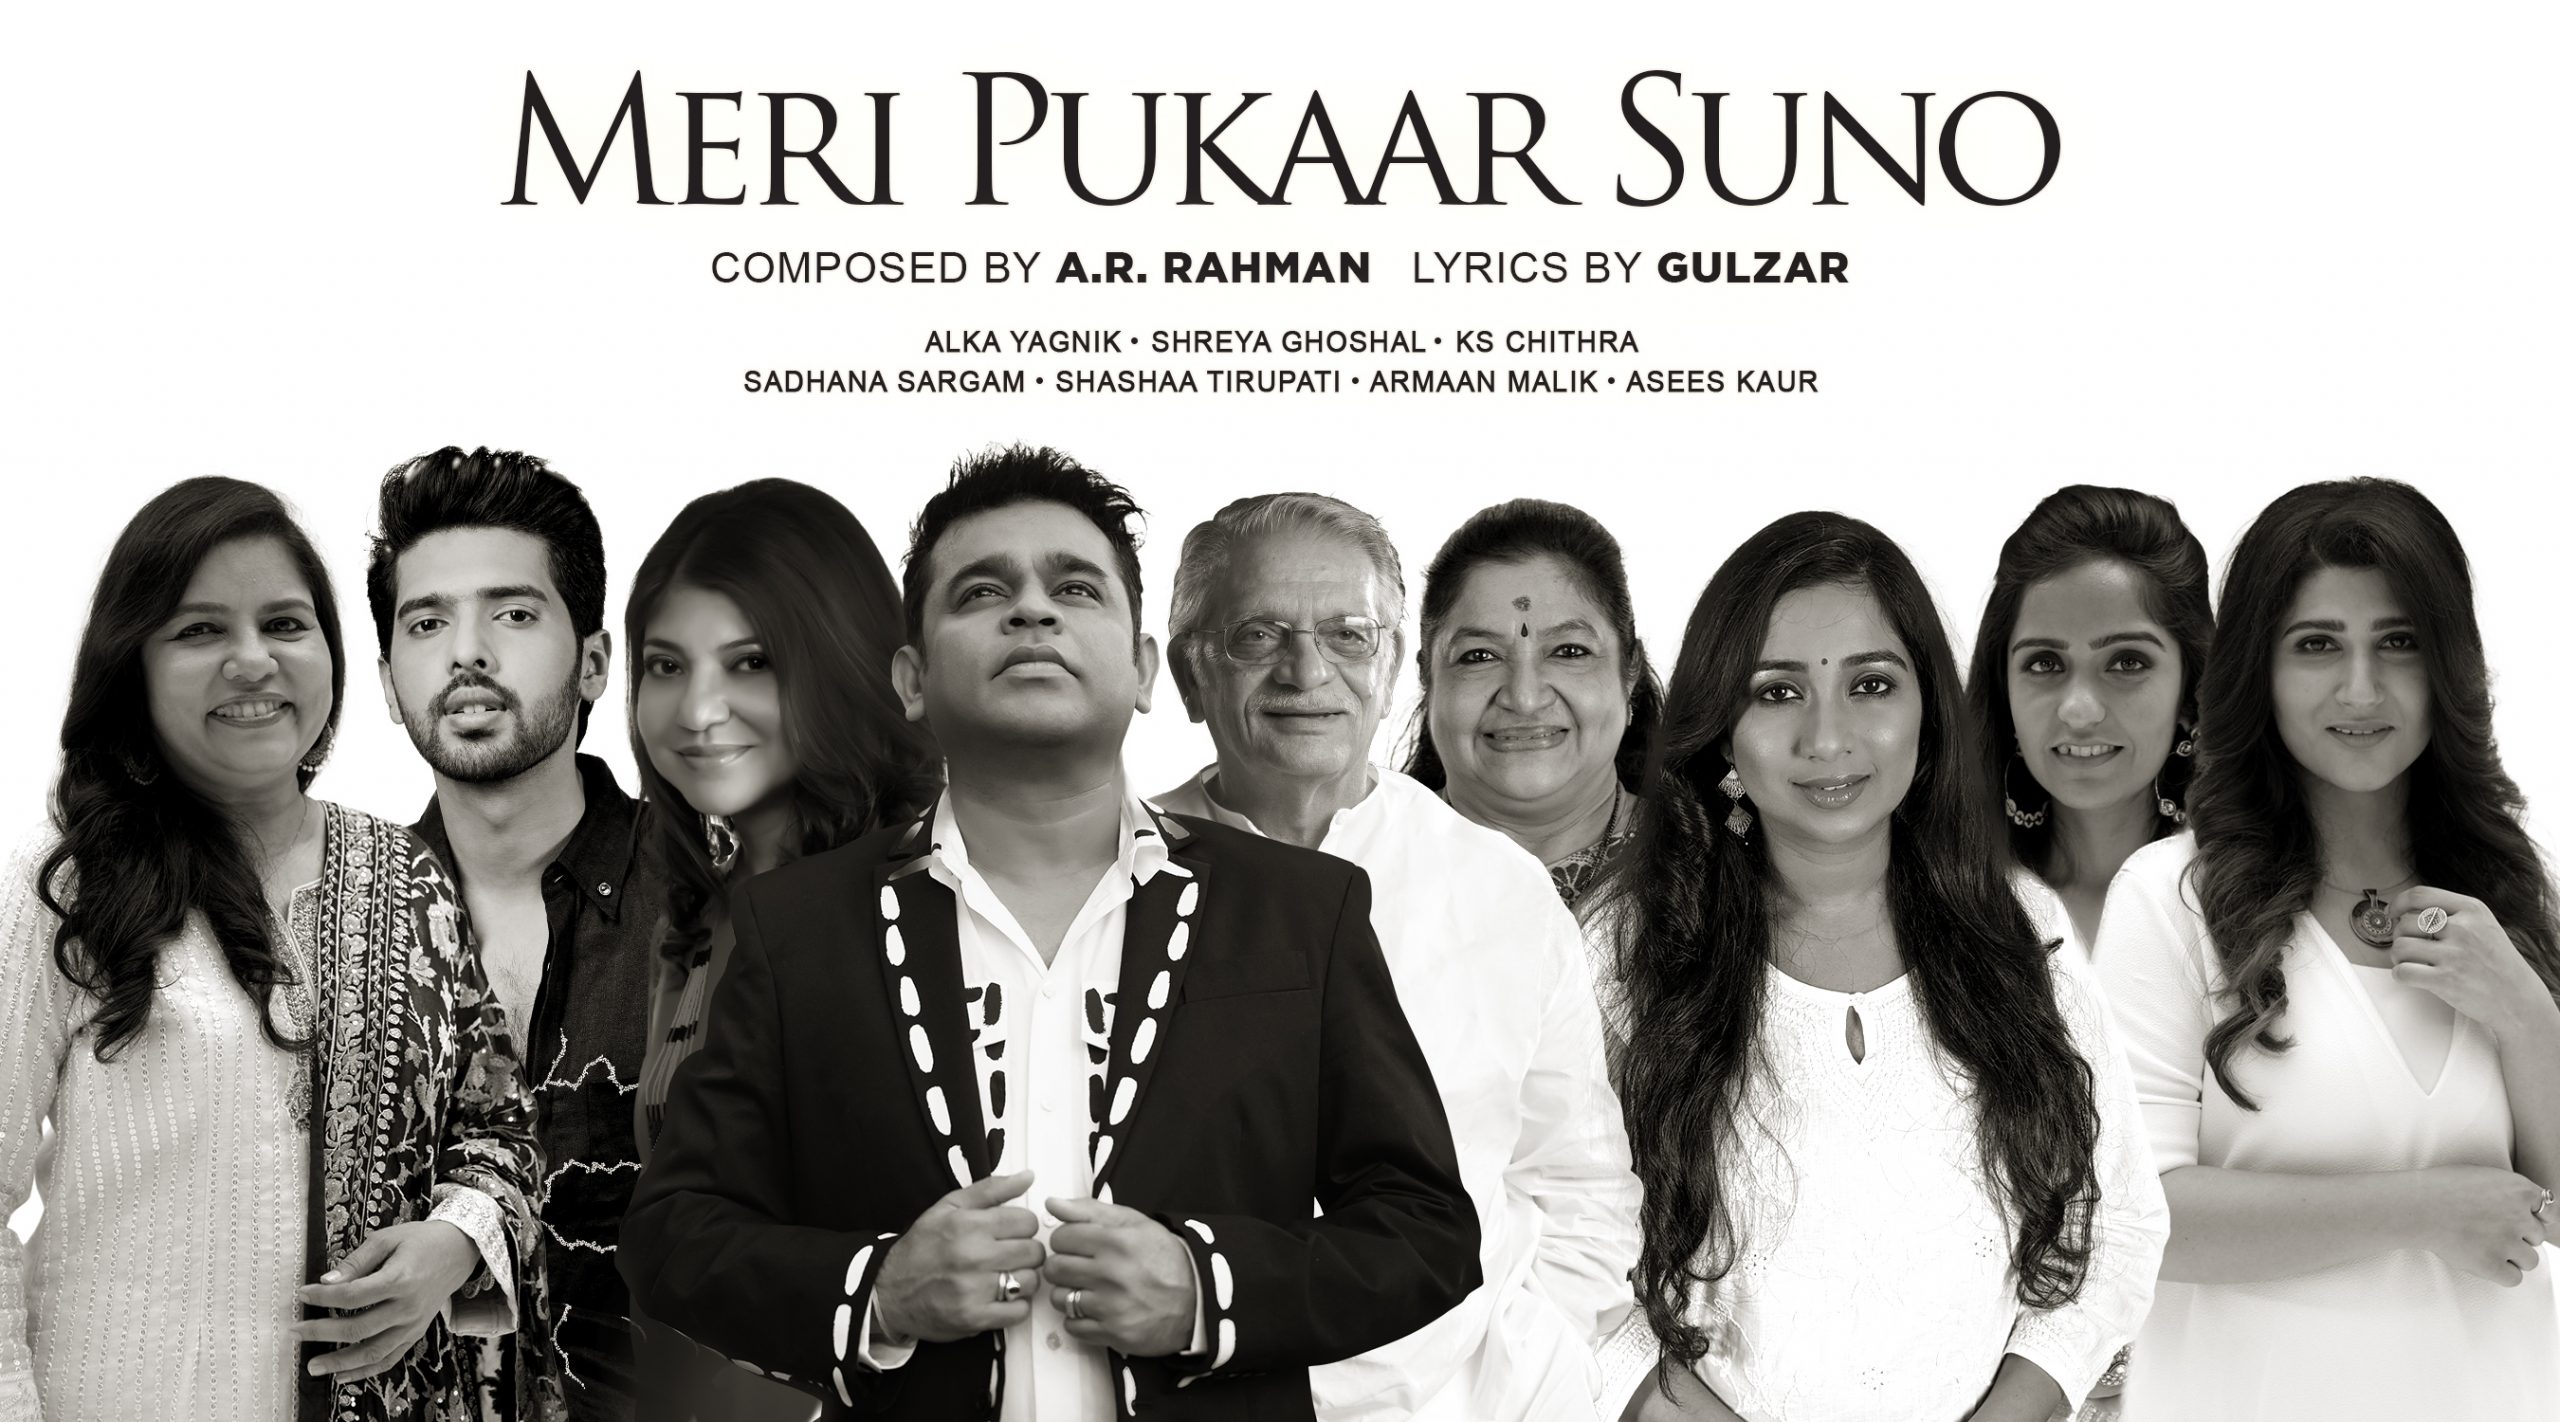 Sony Music India brings A.R. Rahman and Gulzar together for ‘Meri Pukaar Suno’!